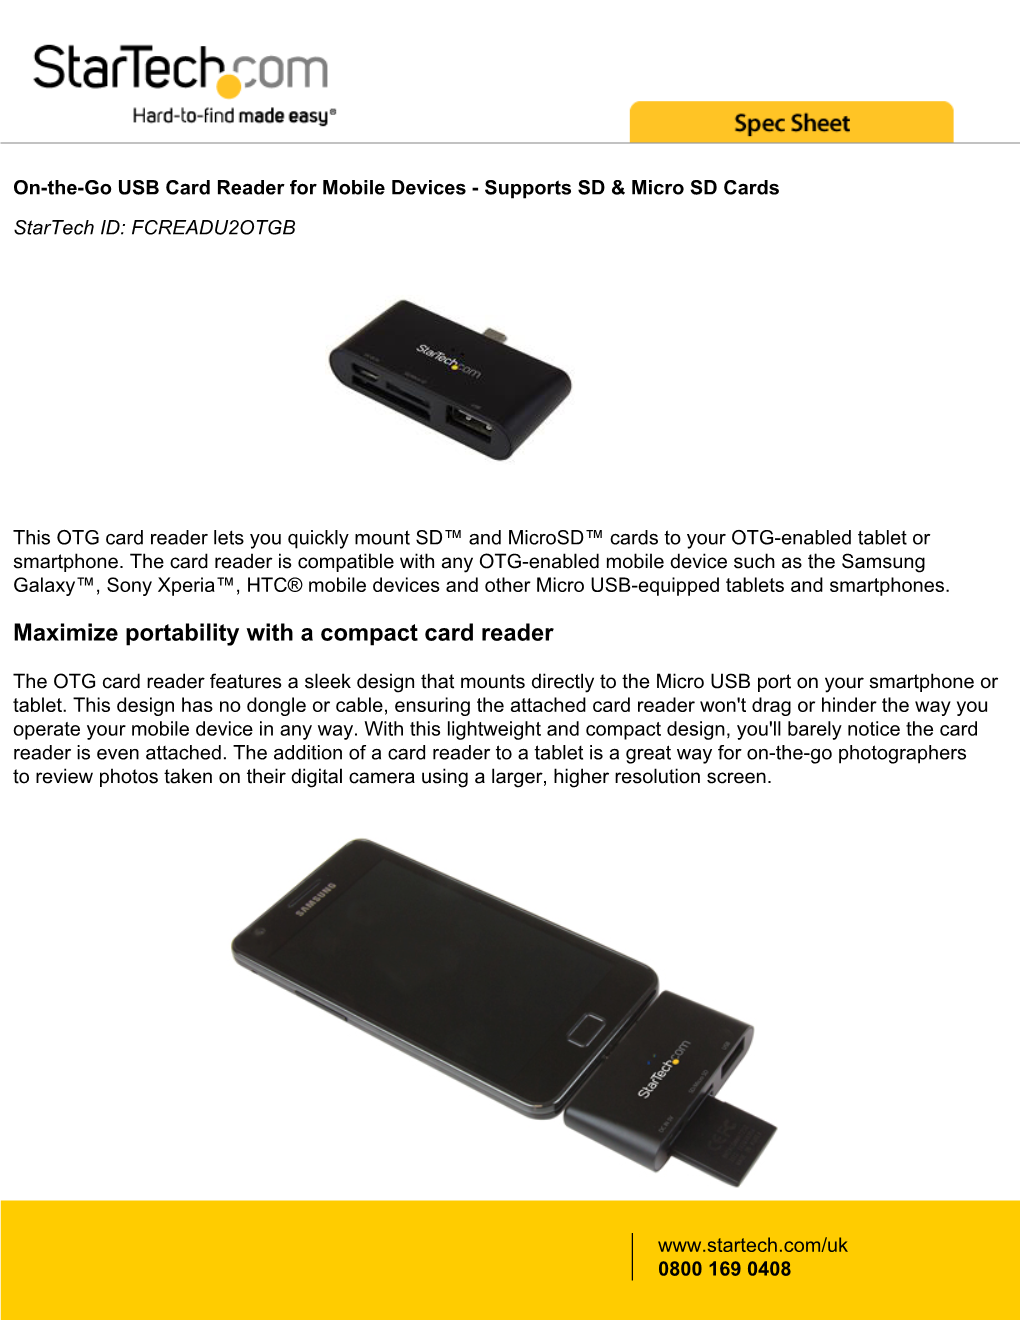 Maximize Portability with a Compact Card Reader